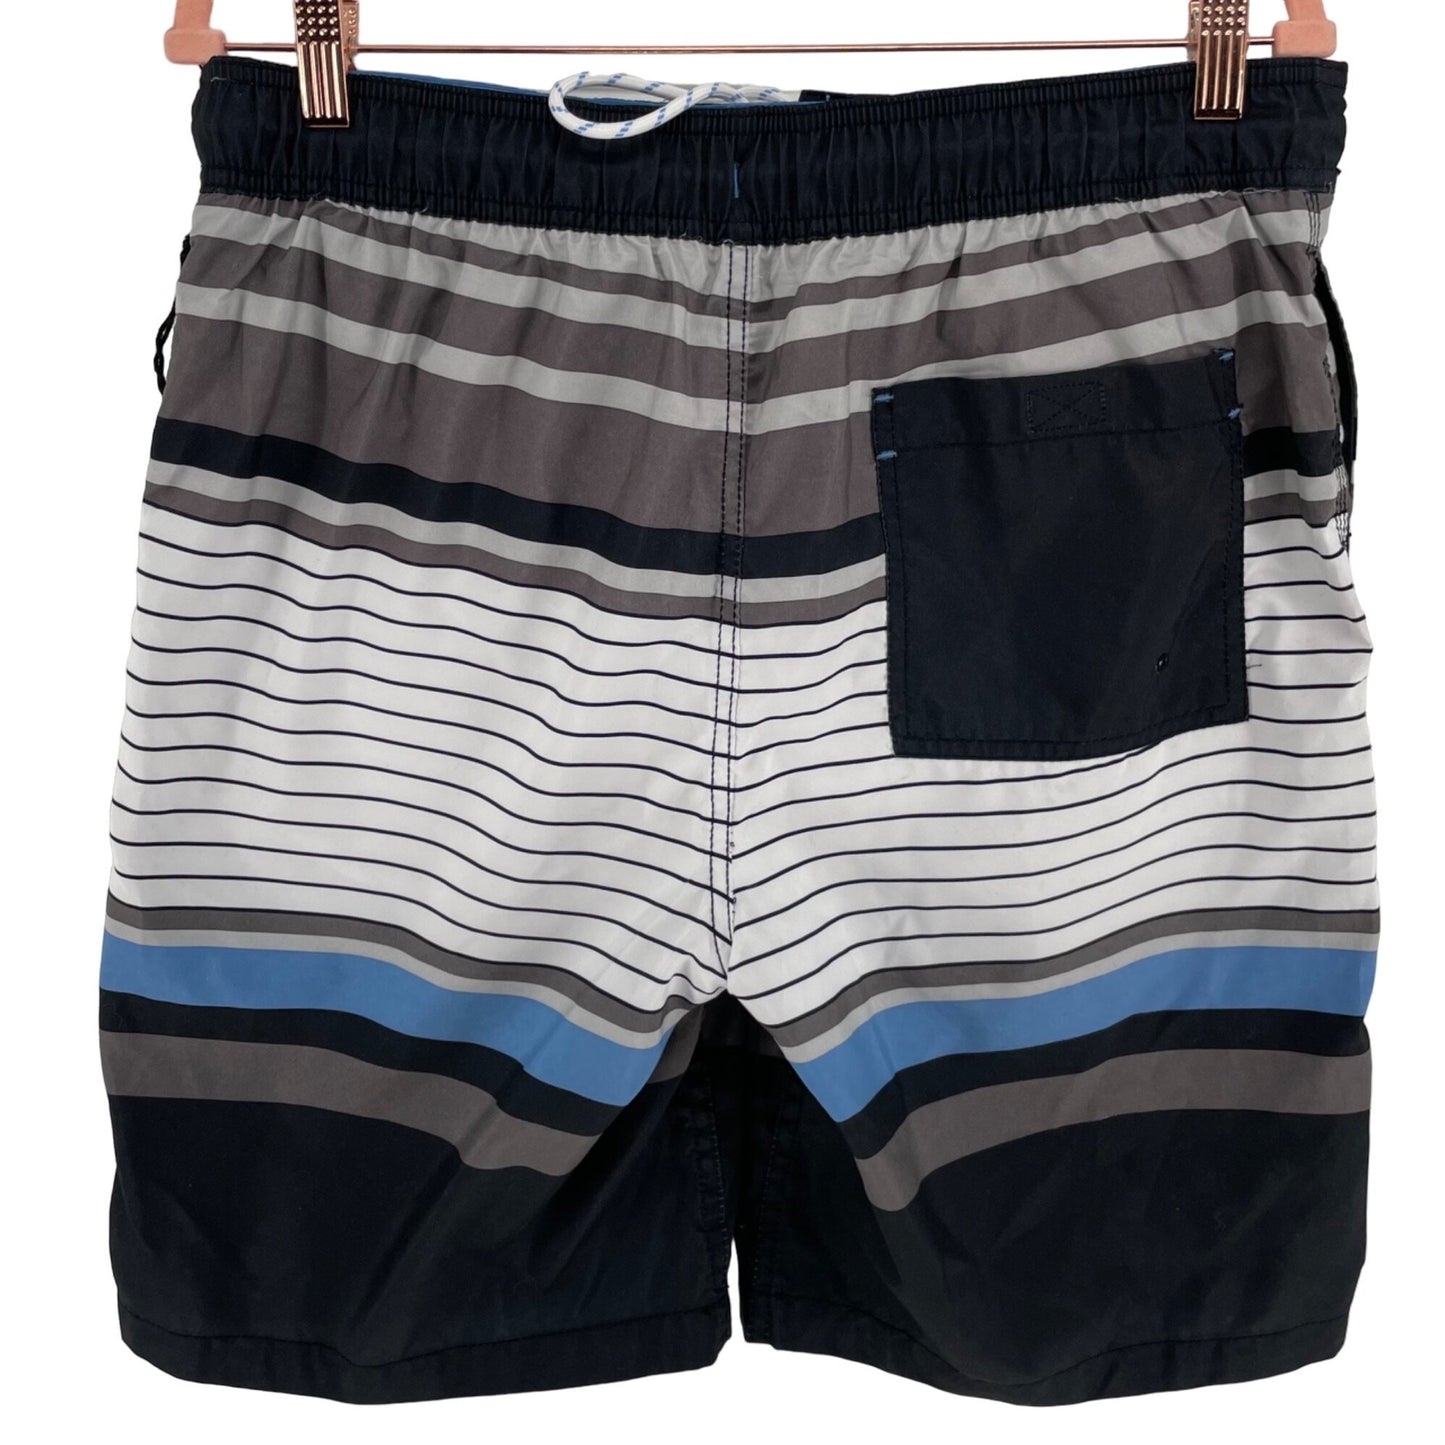 Goodfellow & Co. Men's Size Medium Black/Grey/White/Blue Striped Board Shorts